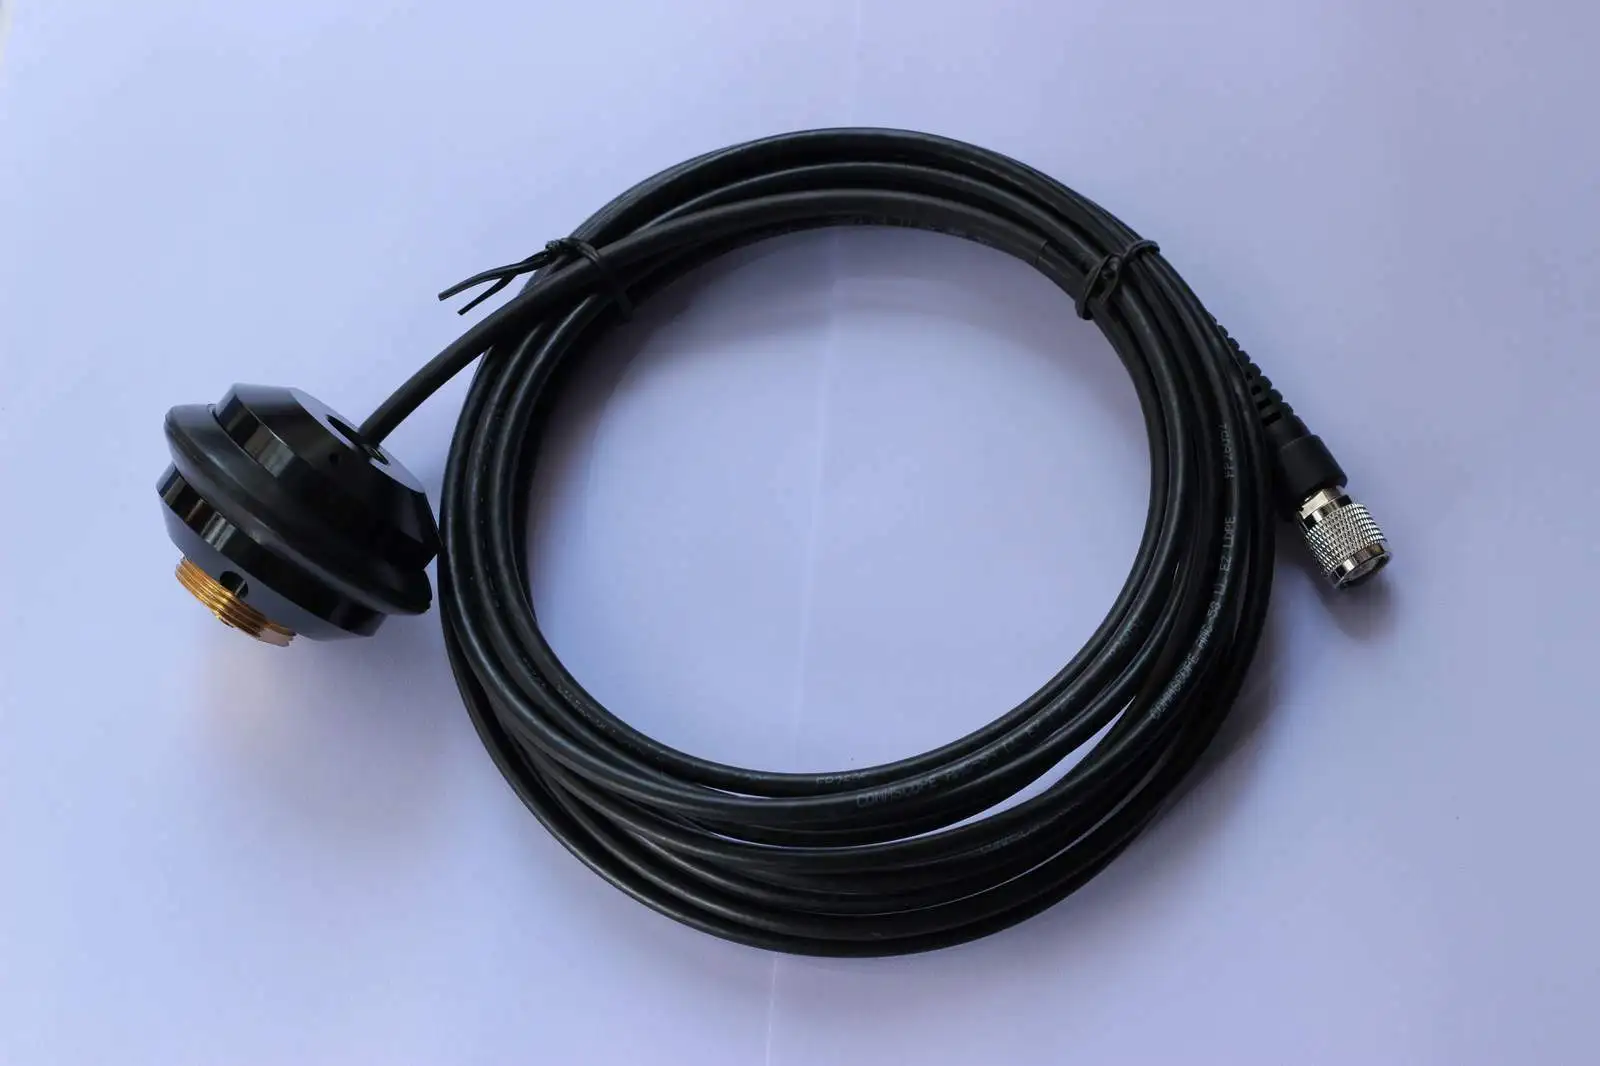 

10M Whip Antenna Pole Mount, 22720 cable TNC connector for GPS Trimble topcon